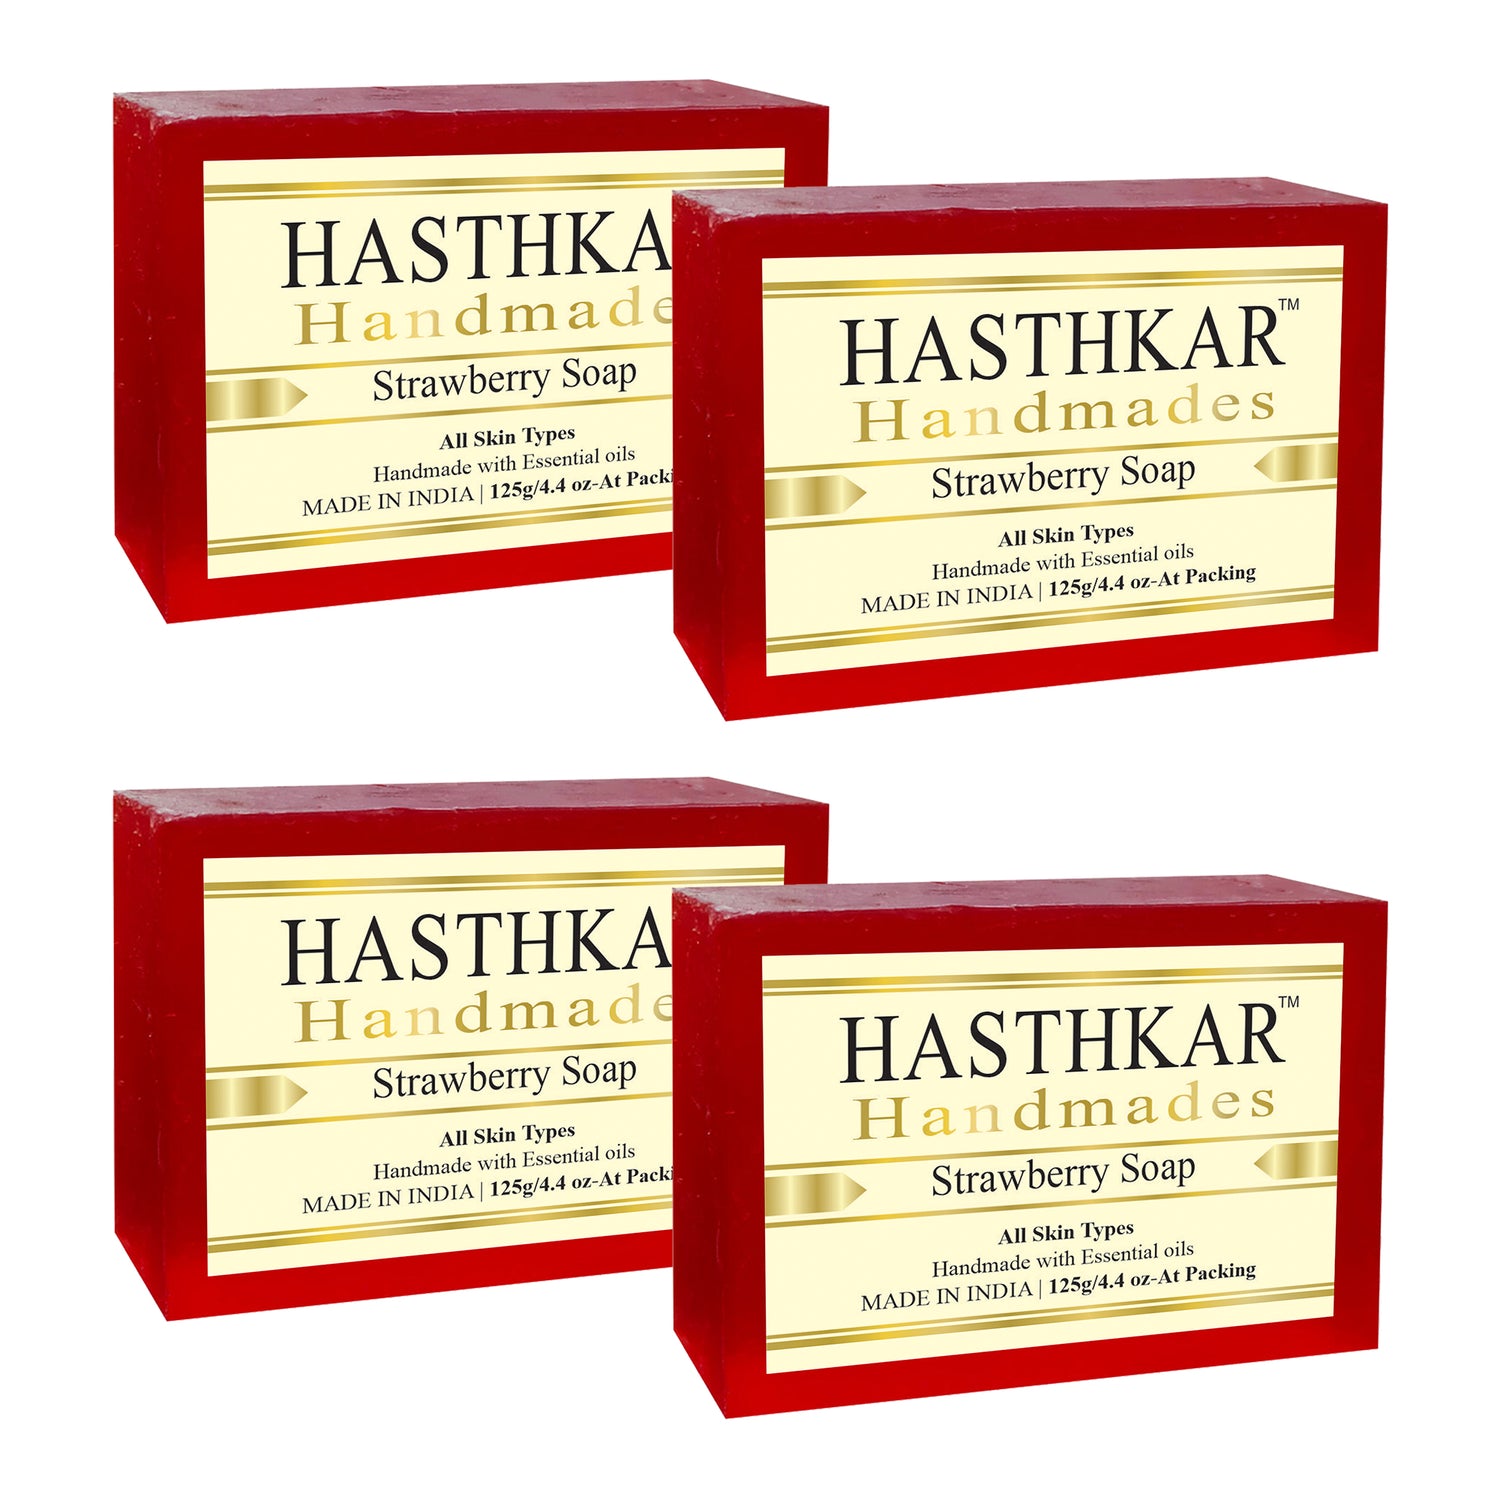 Hasthkar Handmades strawberry bath soap men women pack of 4